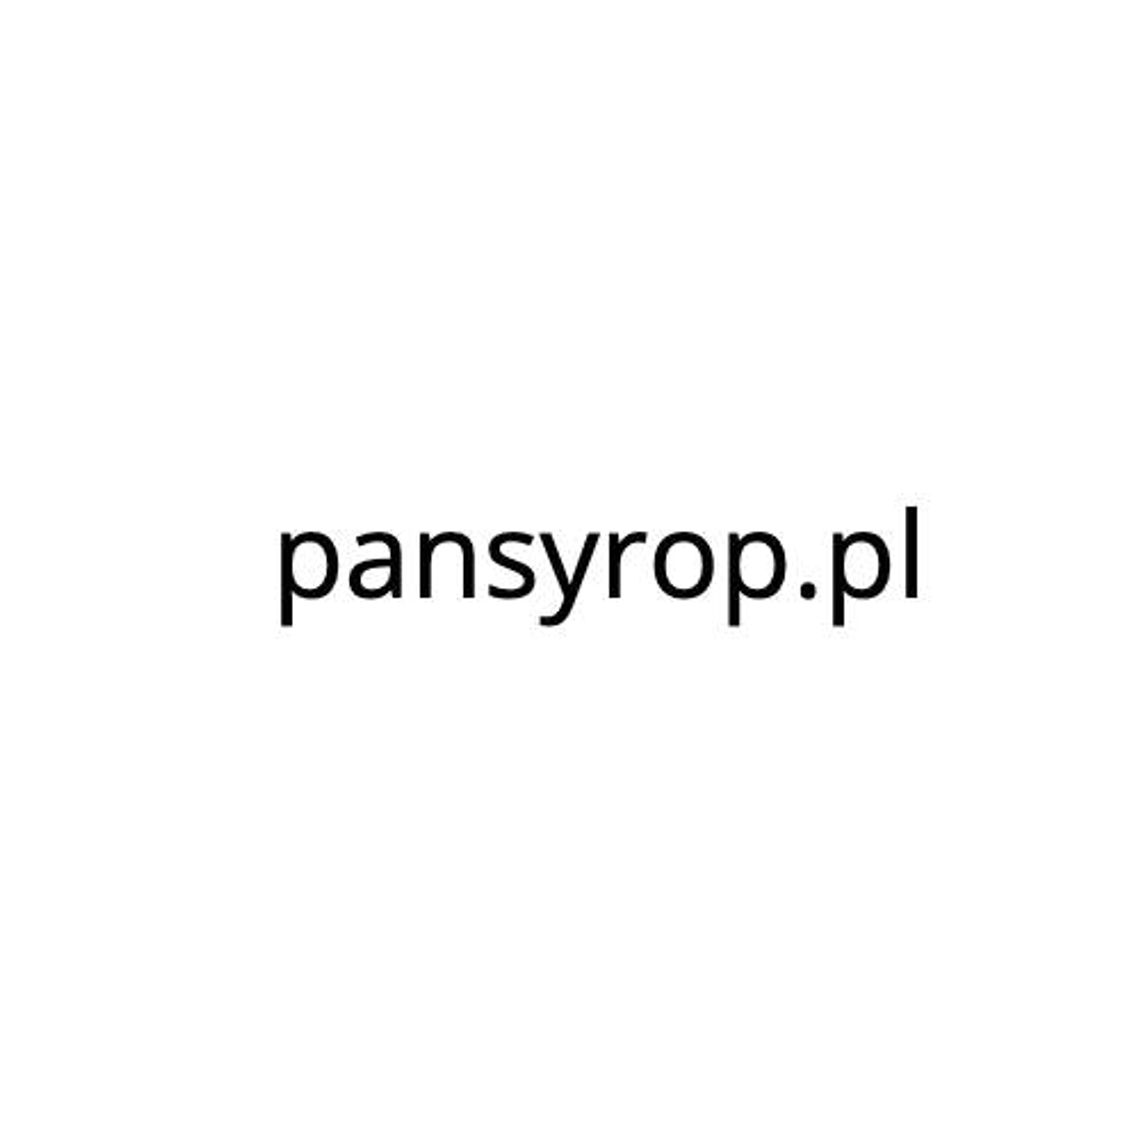 Pansyrop.pl - produkty dla gastronomii